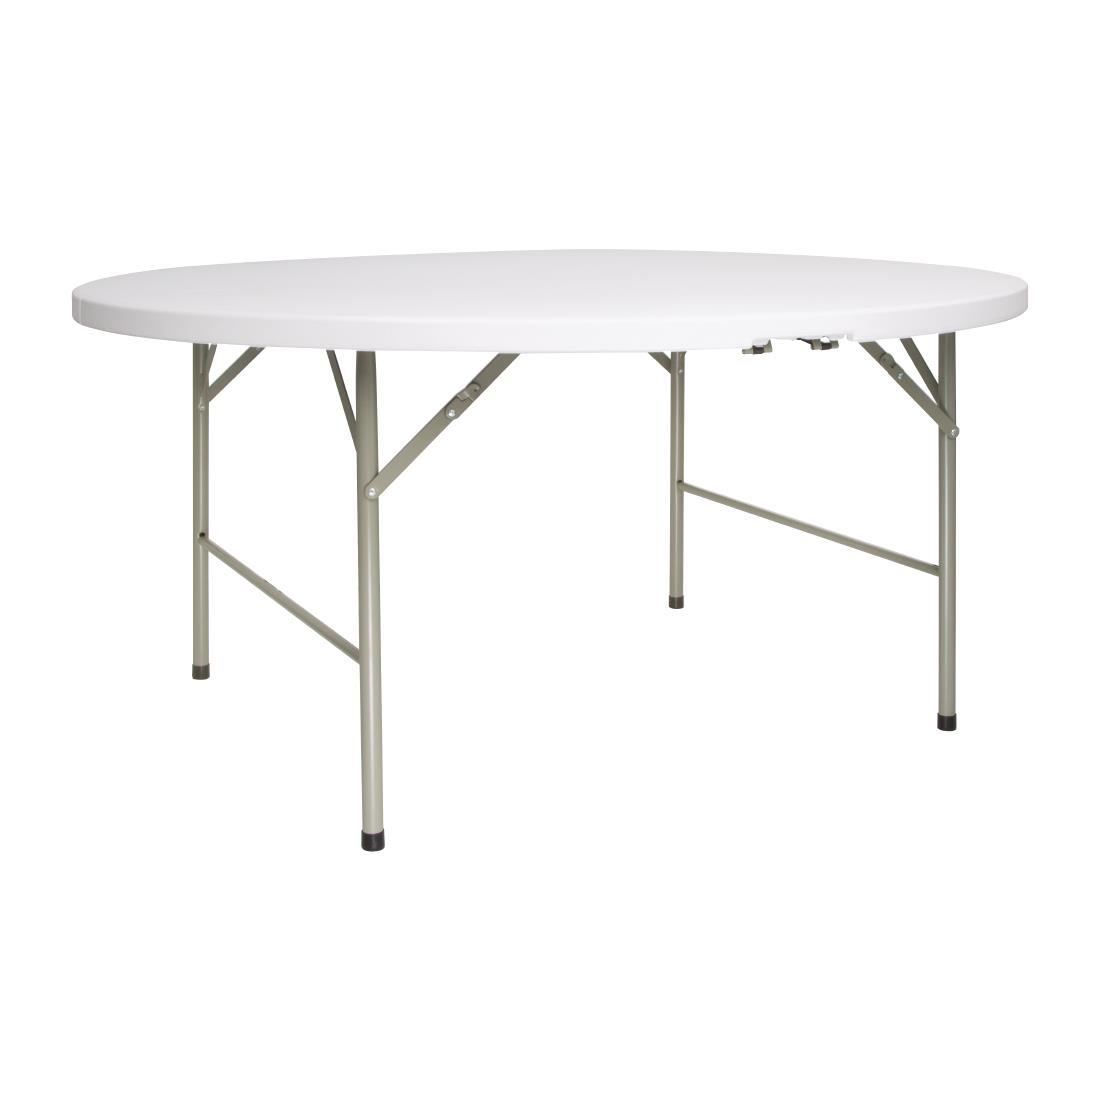 Bolero 5ft Round Folding Table White - CC506  - 1